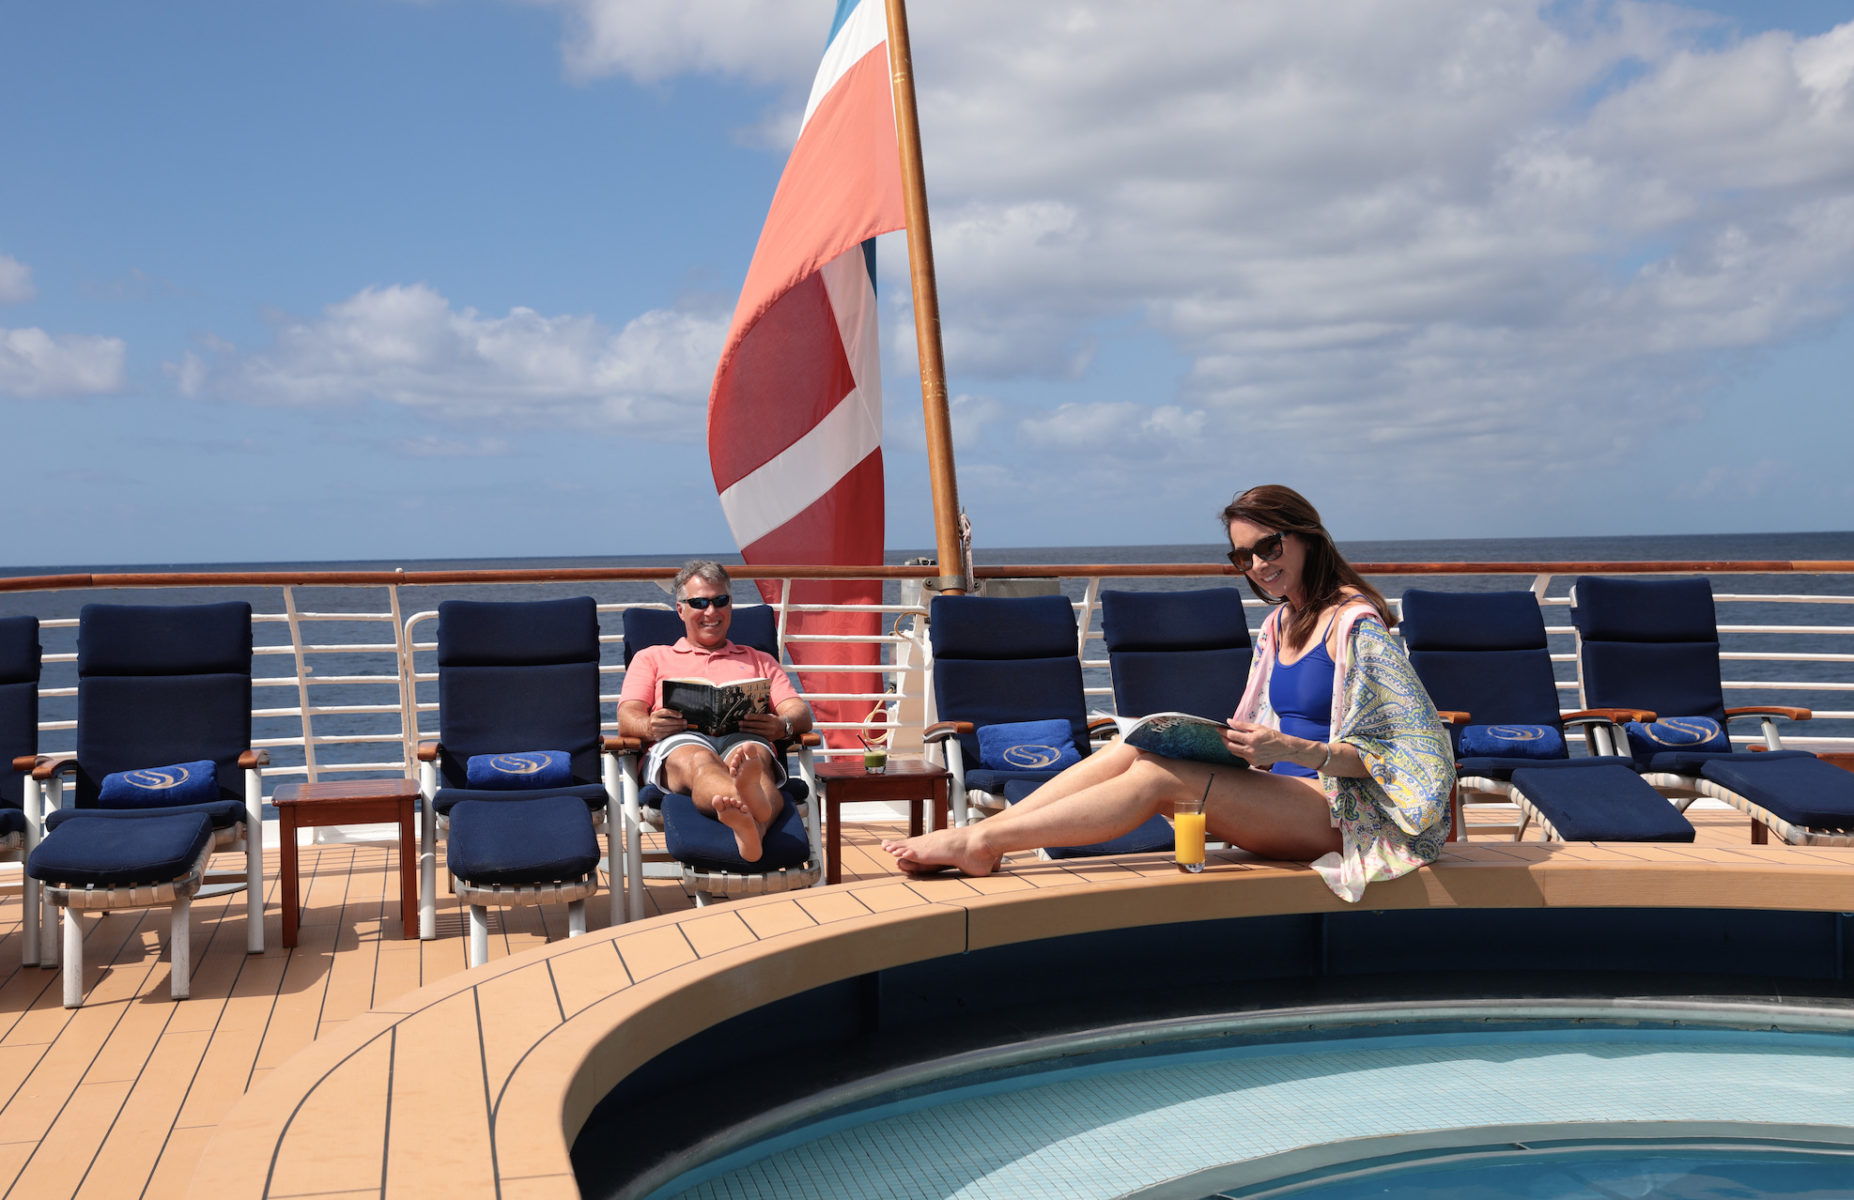 SeaDream Yacht Club - a luxury cruiseline defined by its casual elegance